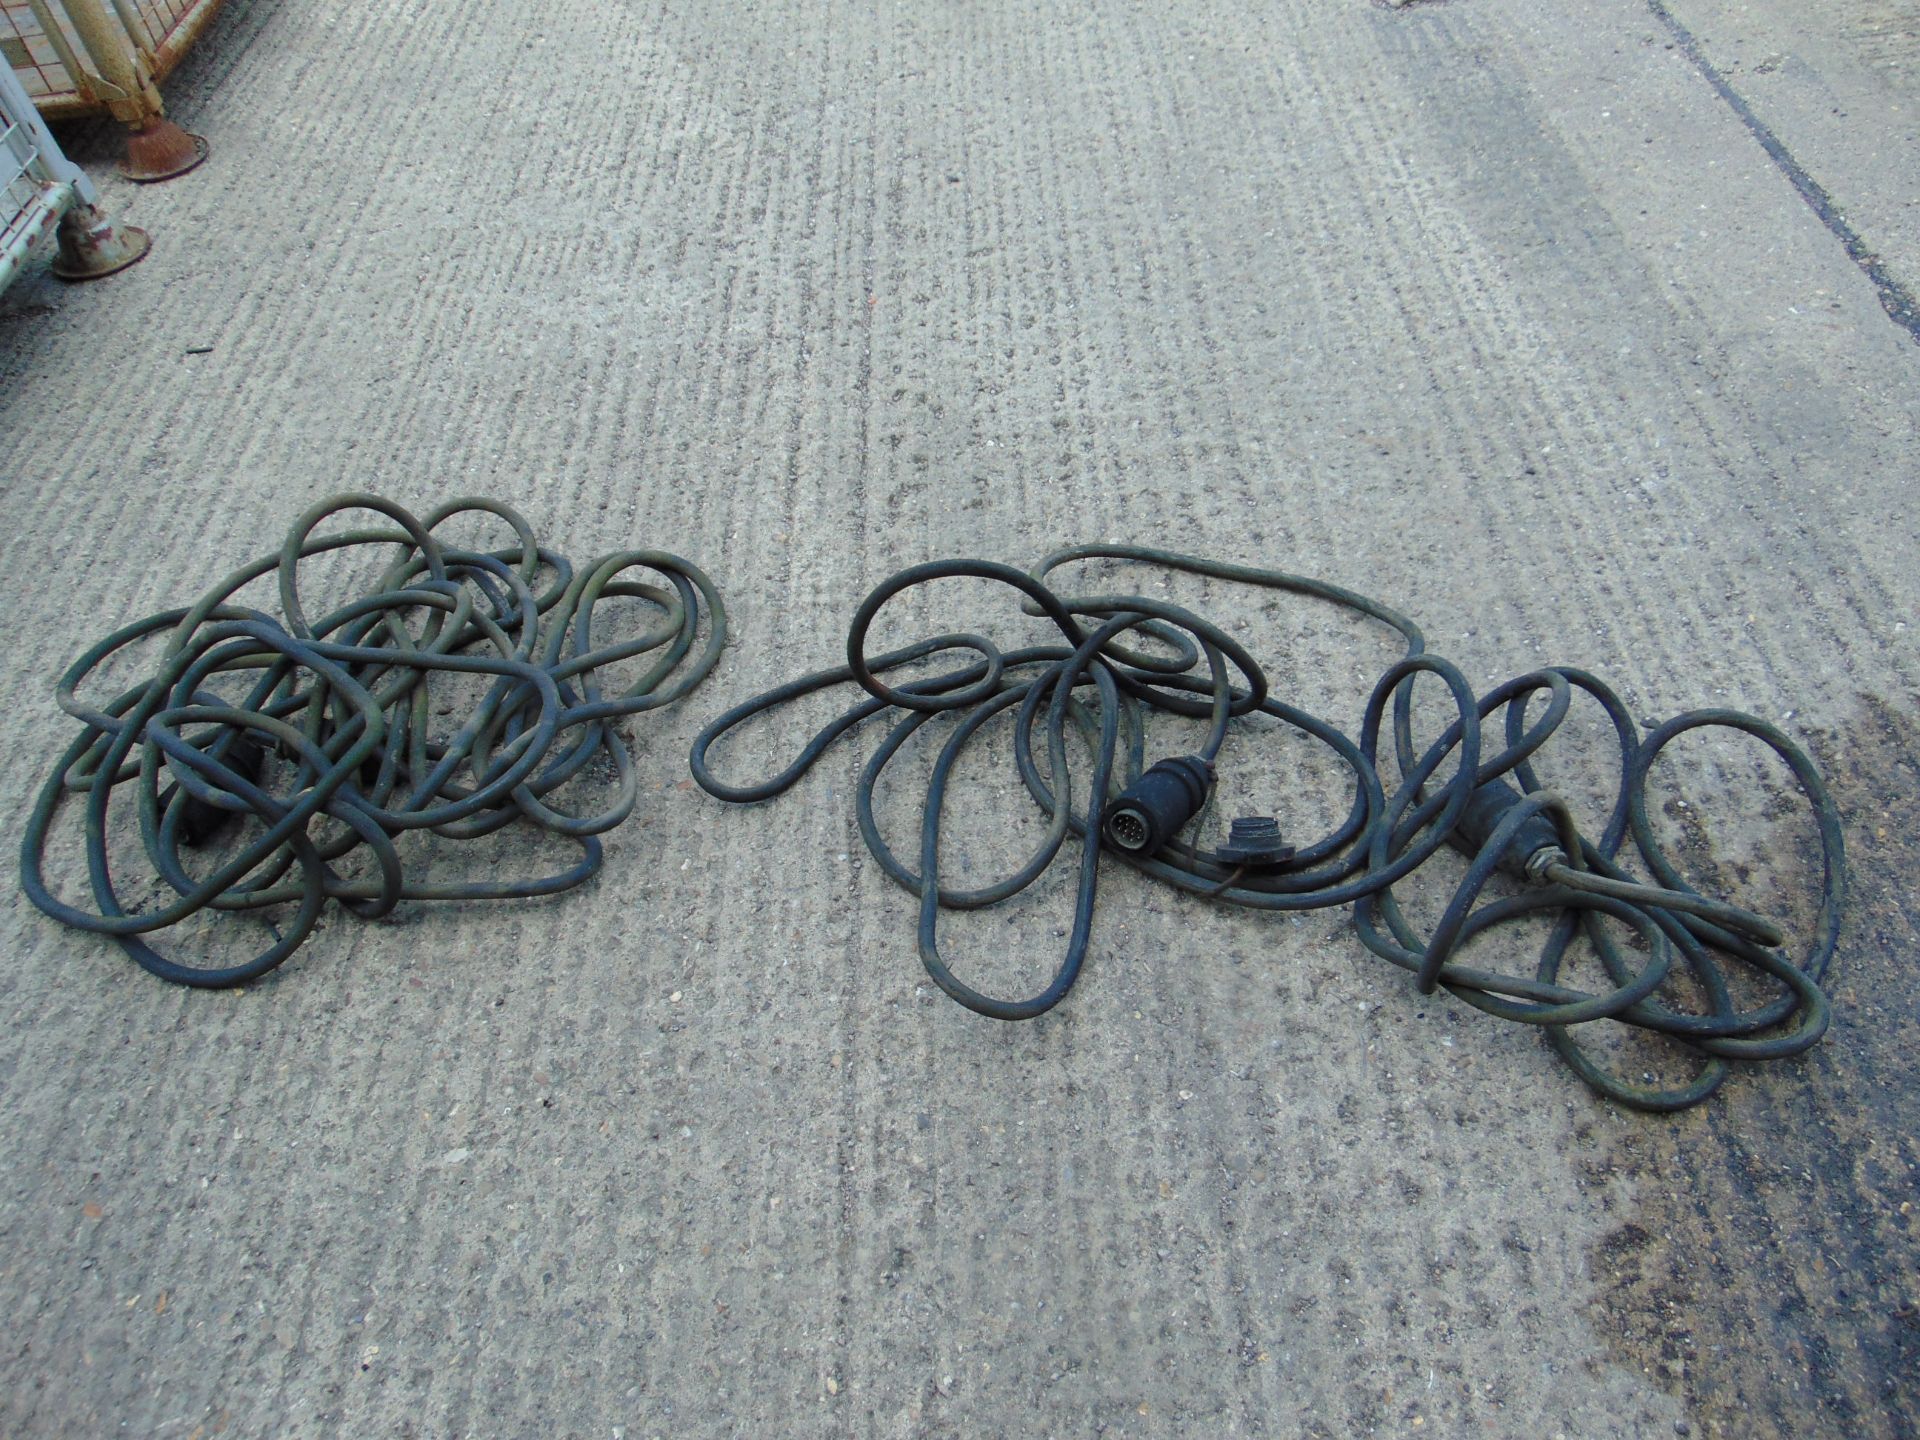 2 x Long NATO socket trailer lighting cables